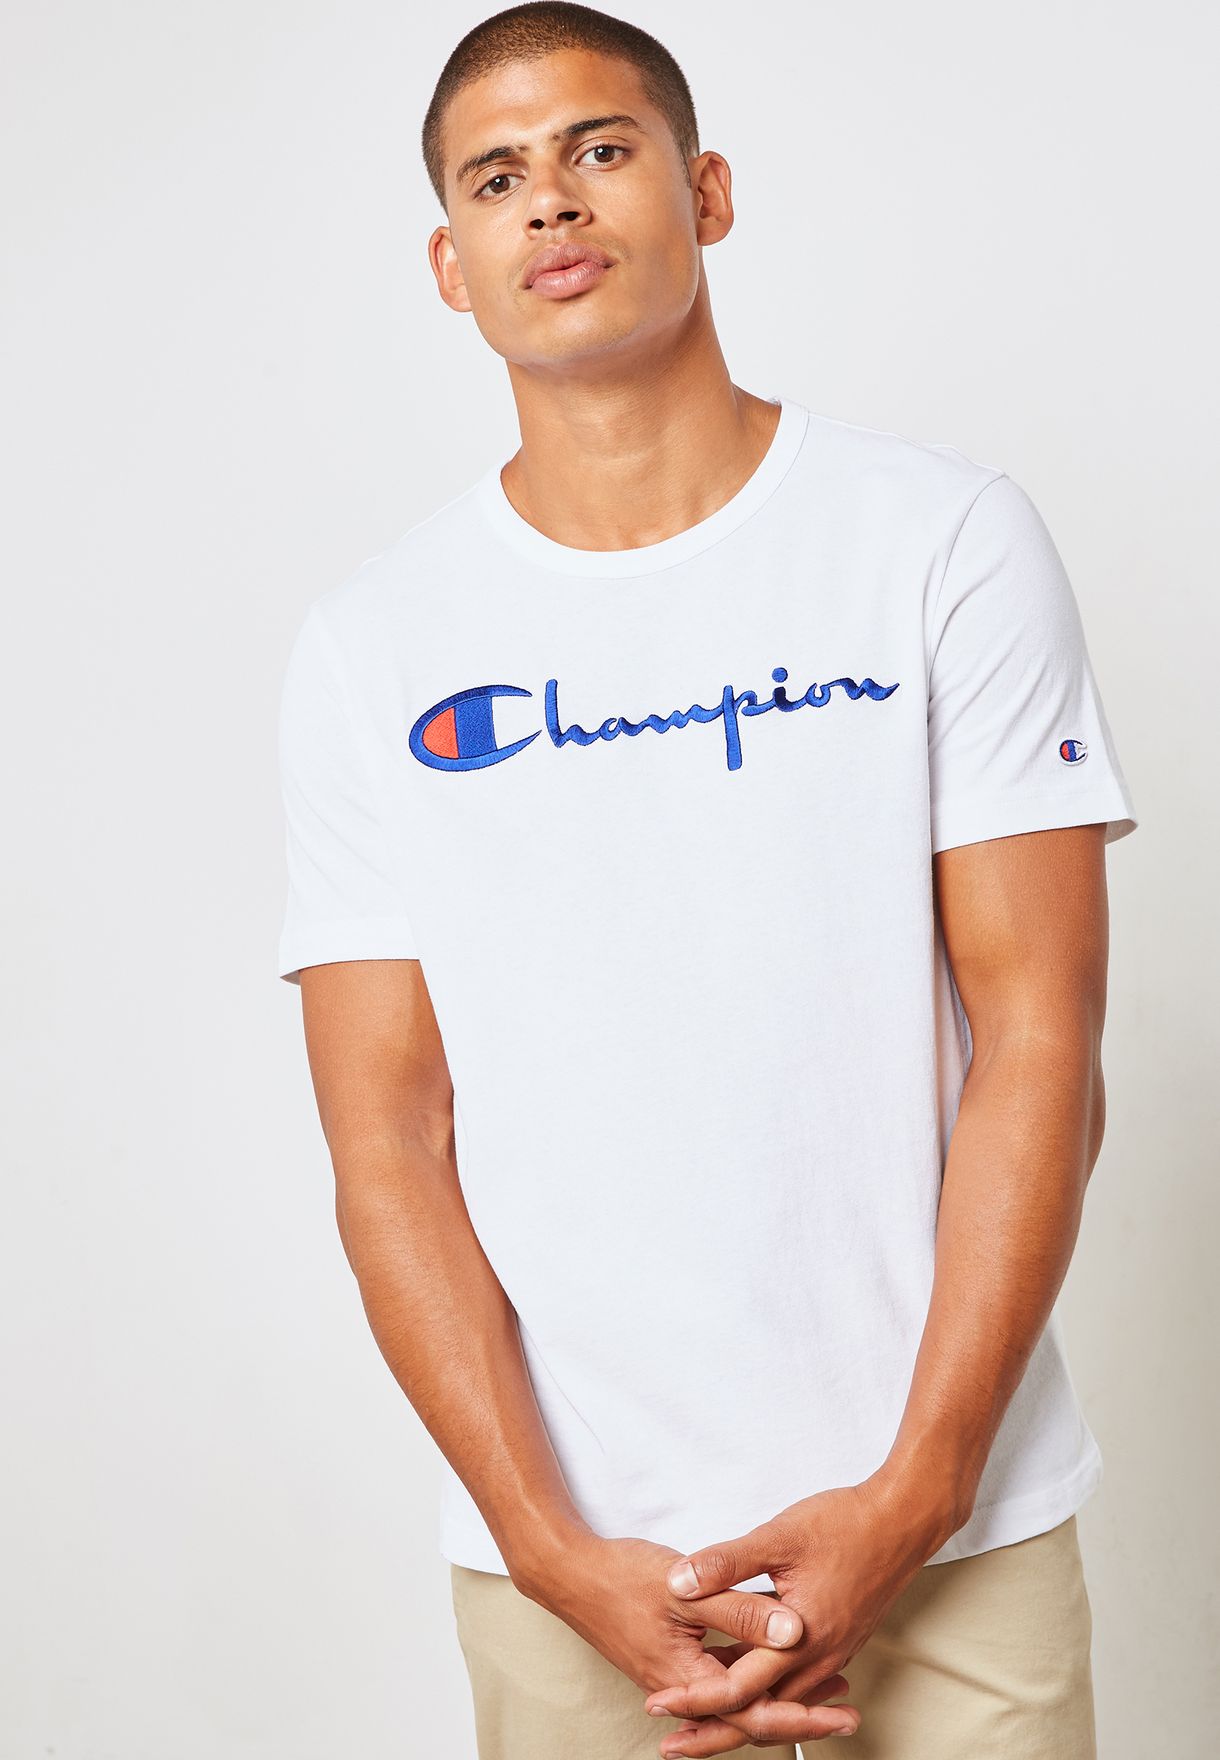 buy champion shirt